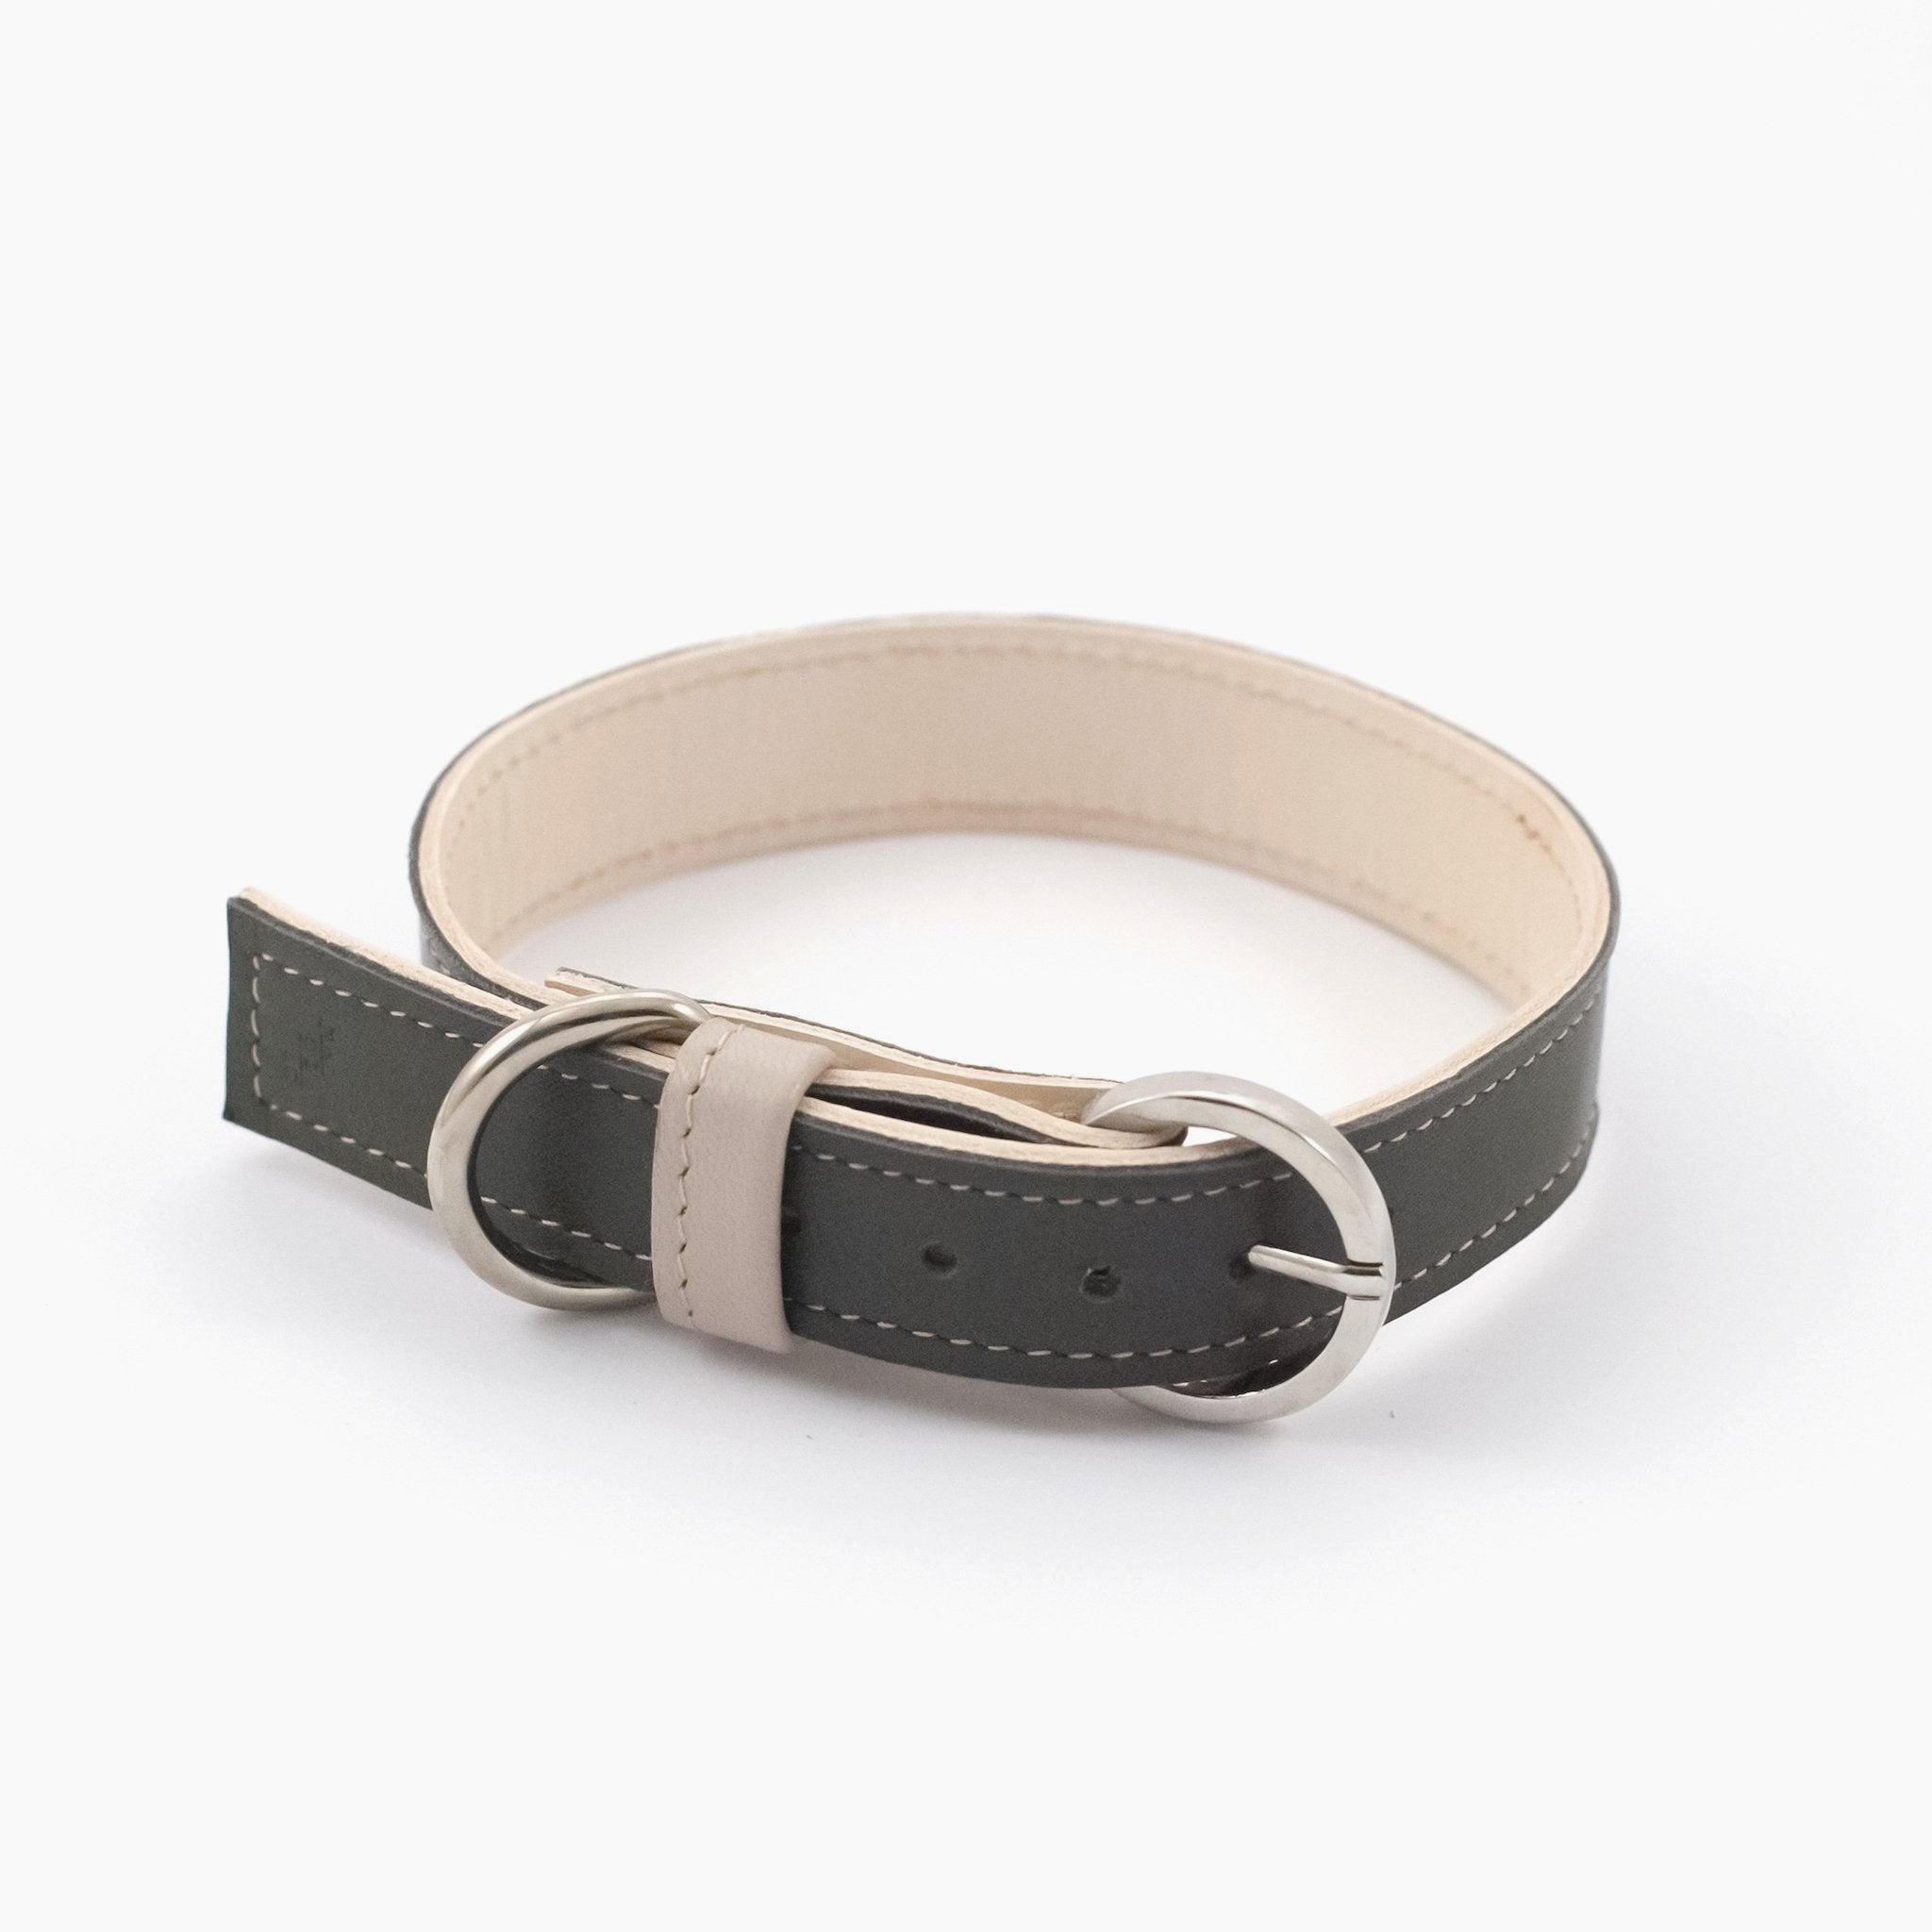 Minimalist Dog Collar - Dark Grey - NEW PETS ON THE BLOCK.COM